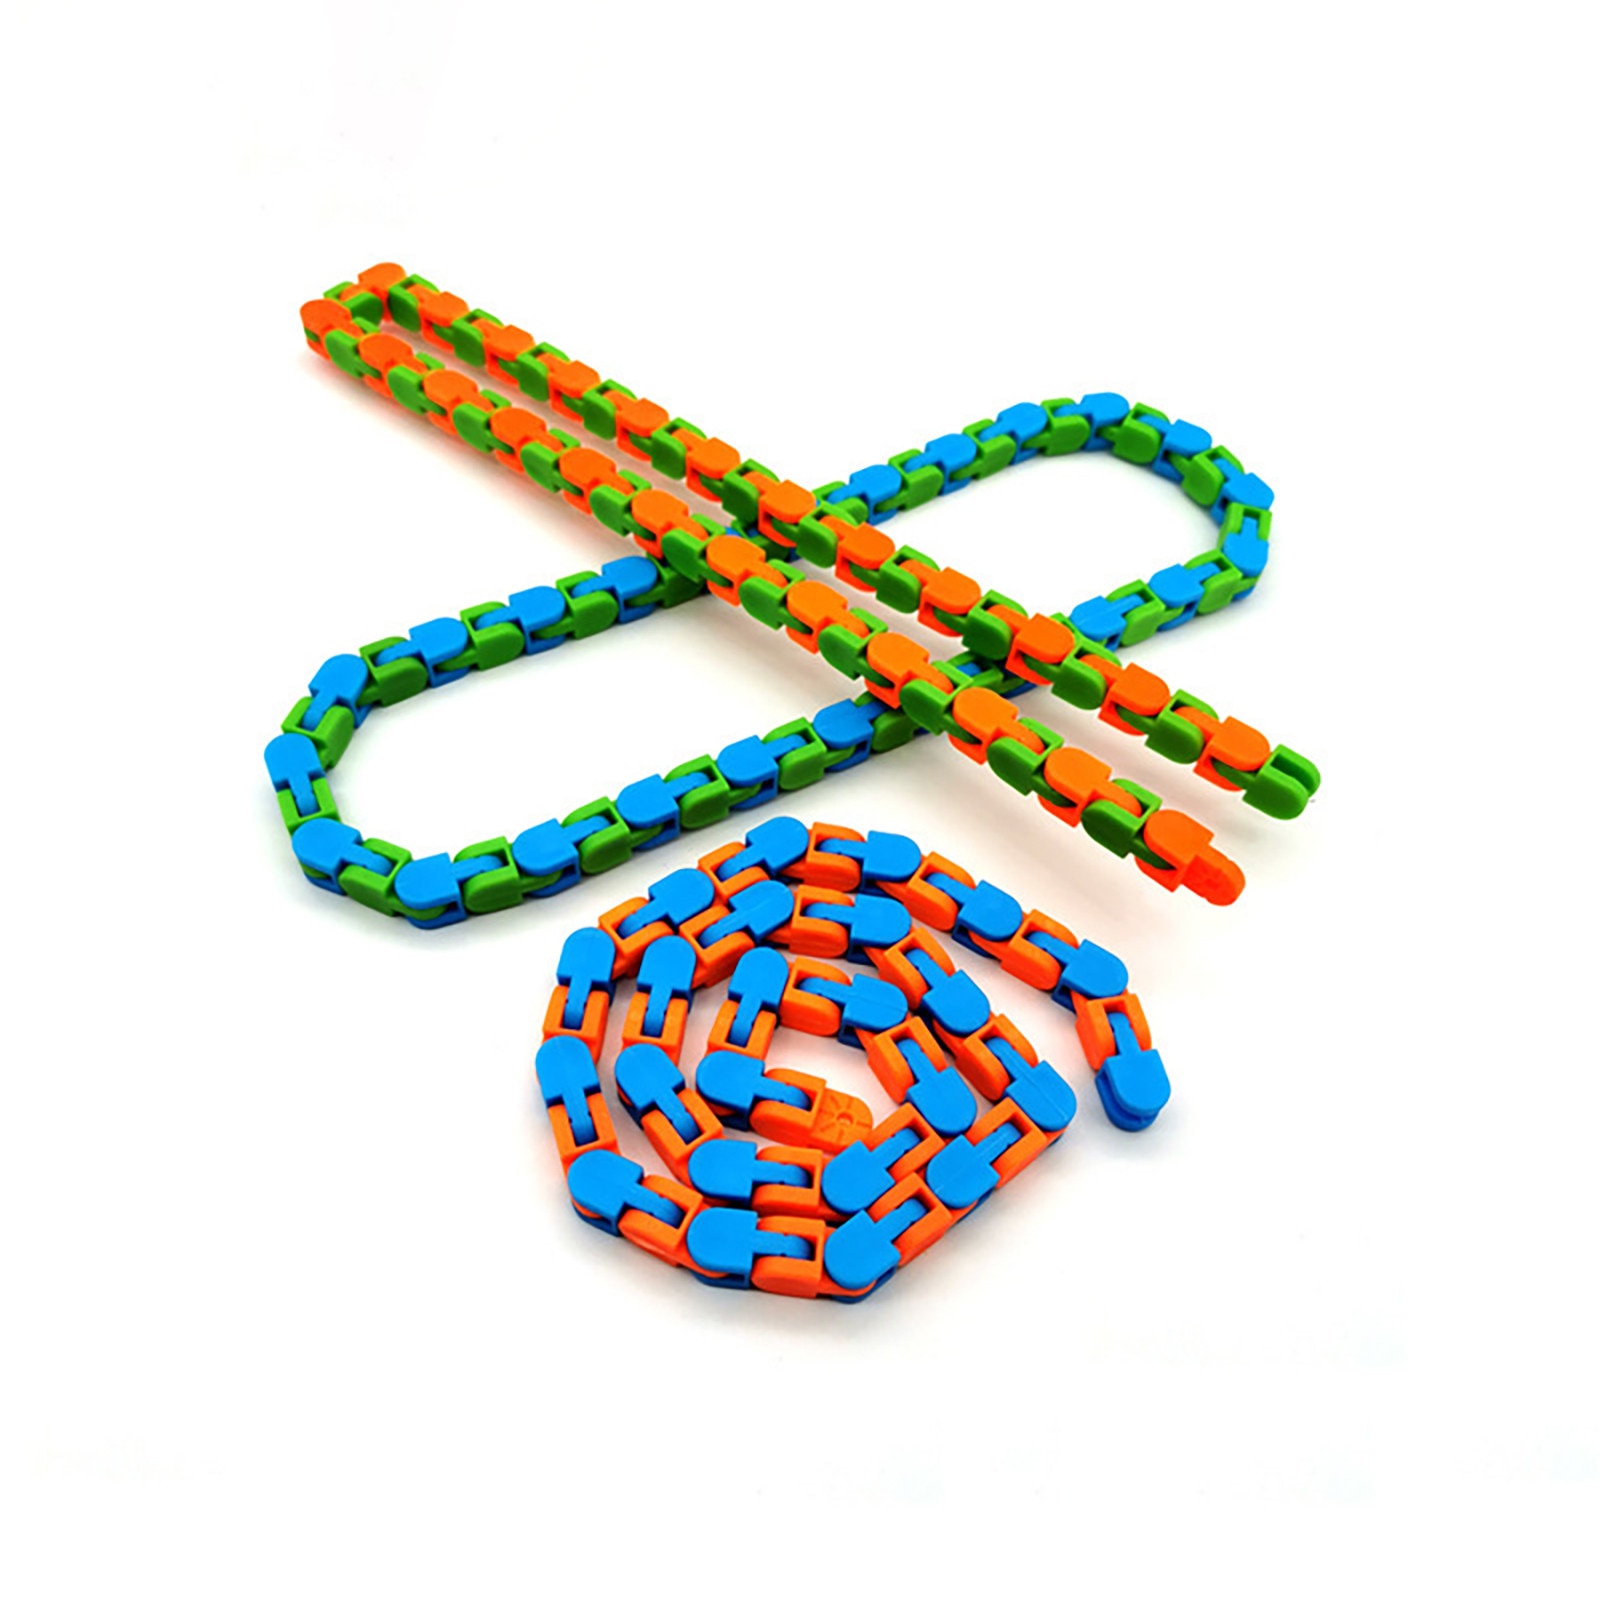 Toys Colorful Puzzle Sensory Tracks Snap And Click Fidget Toys Kids Fidget Toys Stress Relief Rotate 3 - Simple Dimple Fidget